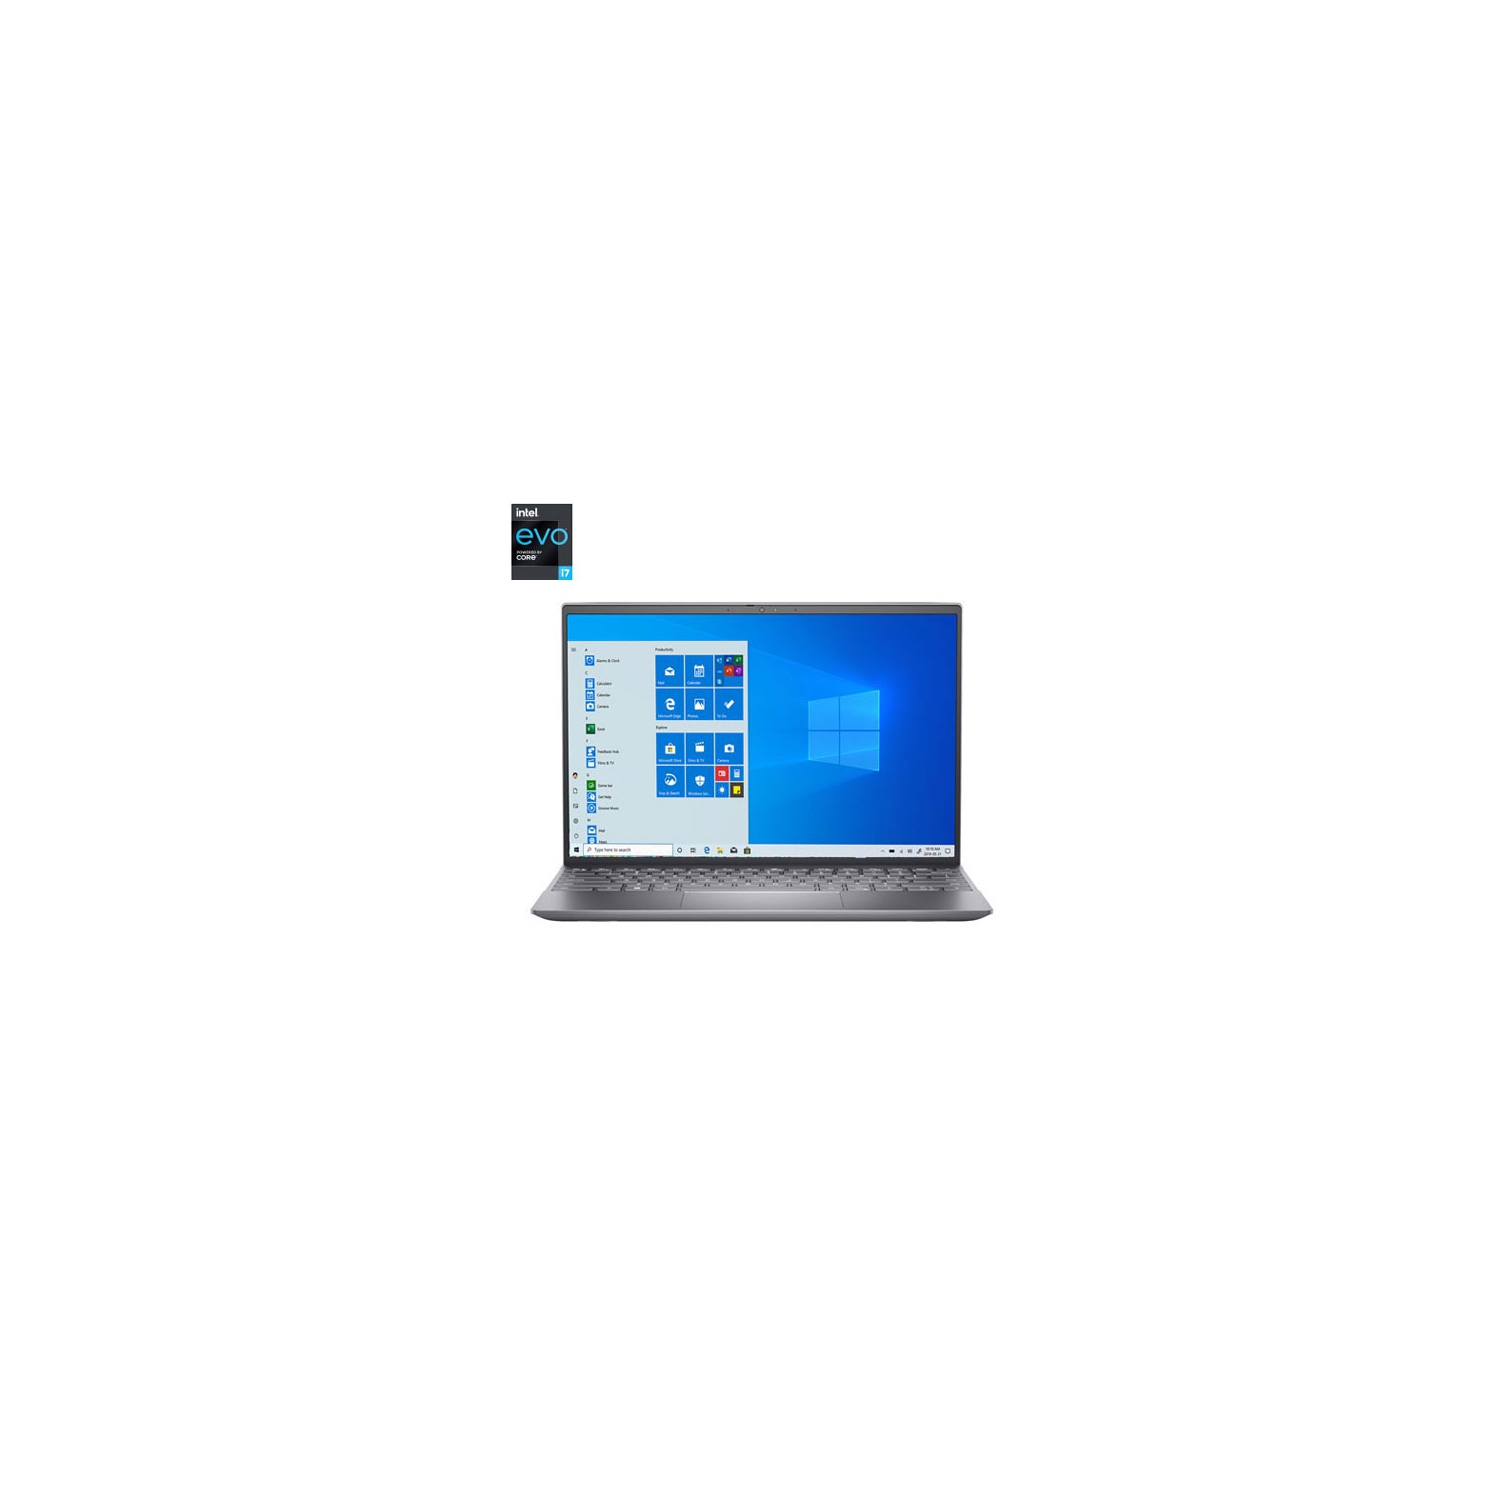 Refurbished (Good) - Dell Inspiron 13 13.3" Laptop - Silver (11th Gen Intel Core i7-11390H/512GB SSD/16GB RAM/Windows 10)